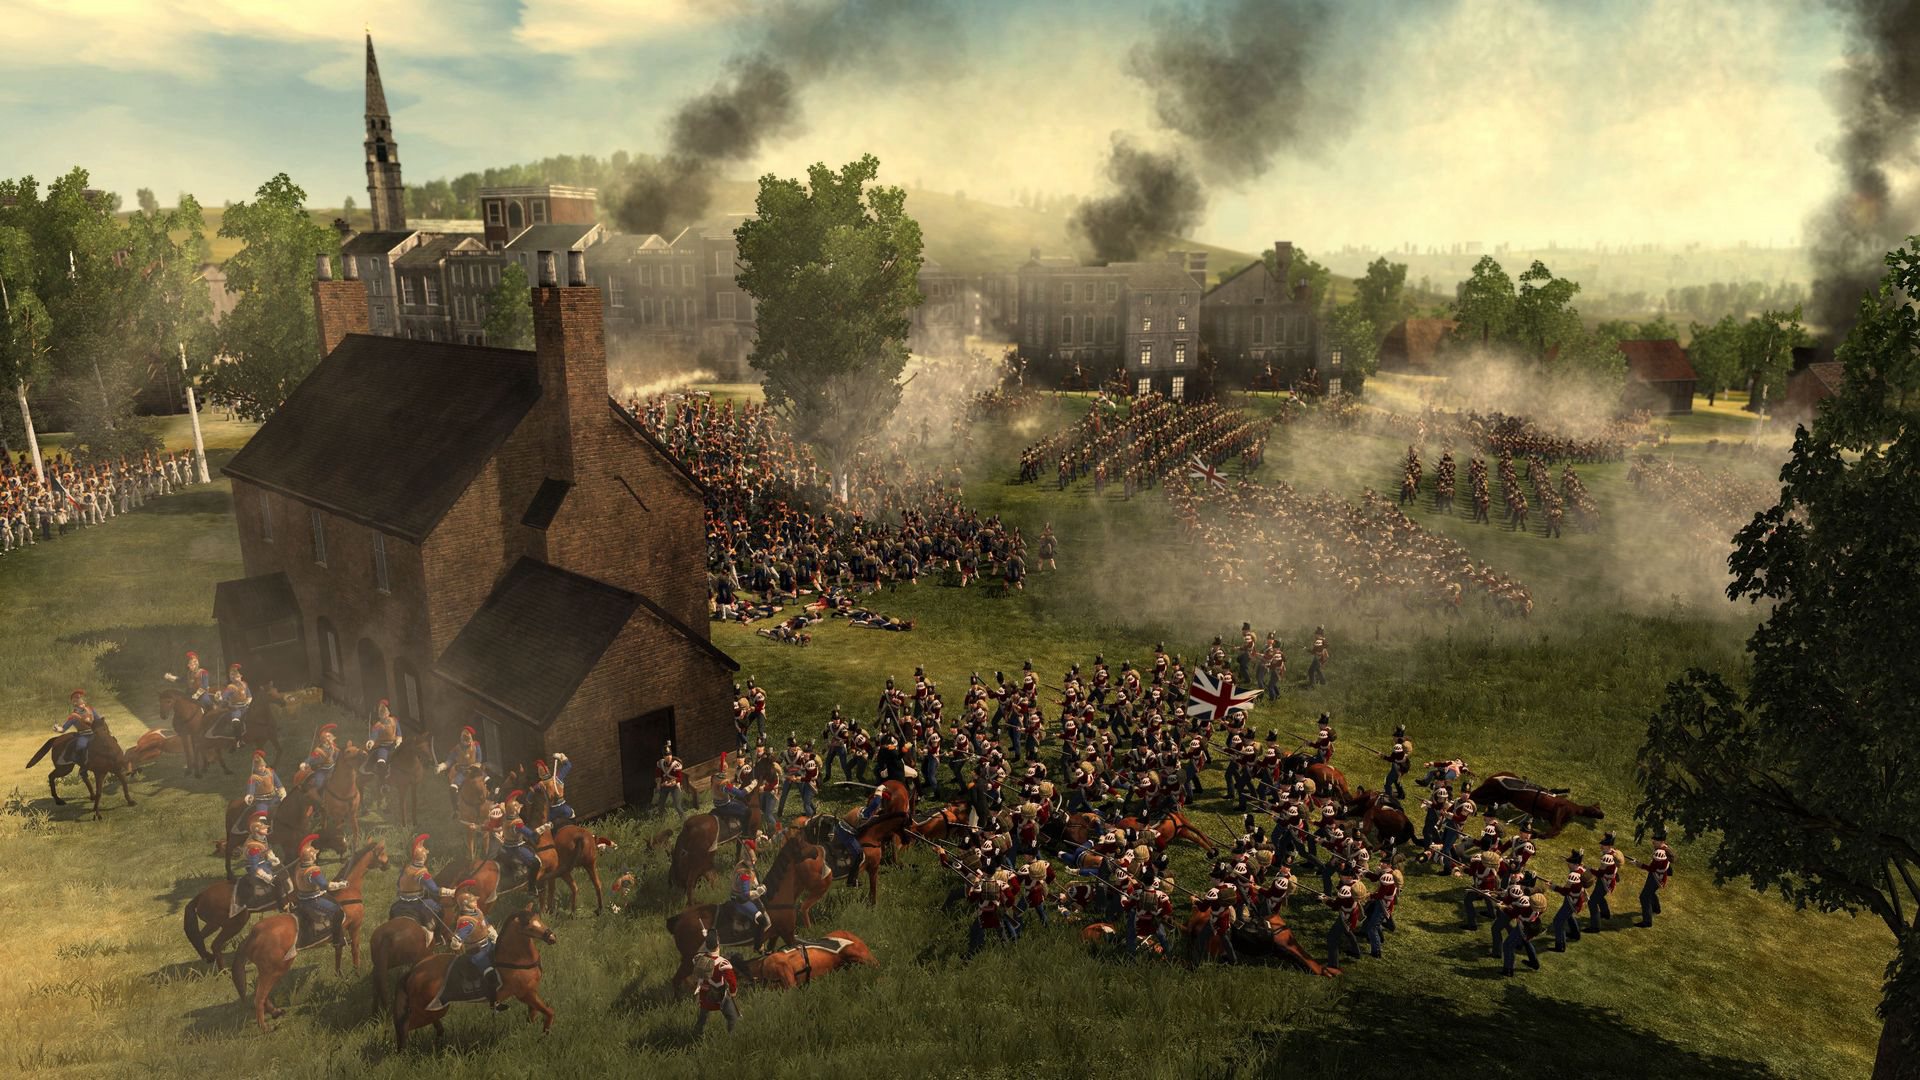 Total War: NAPOLEON Definitive Edition Steam CD Key